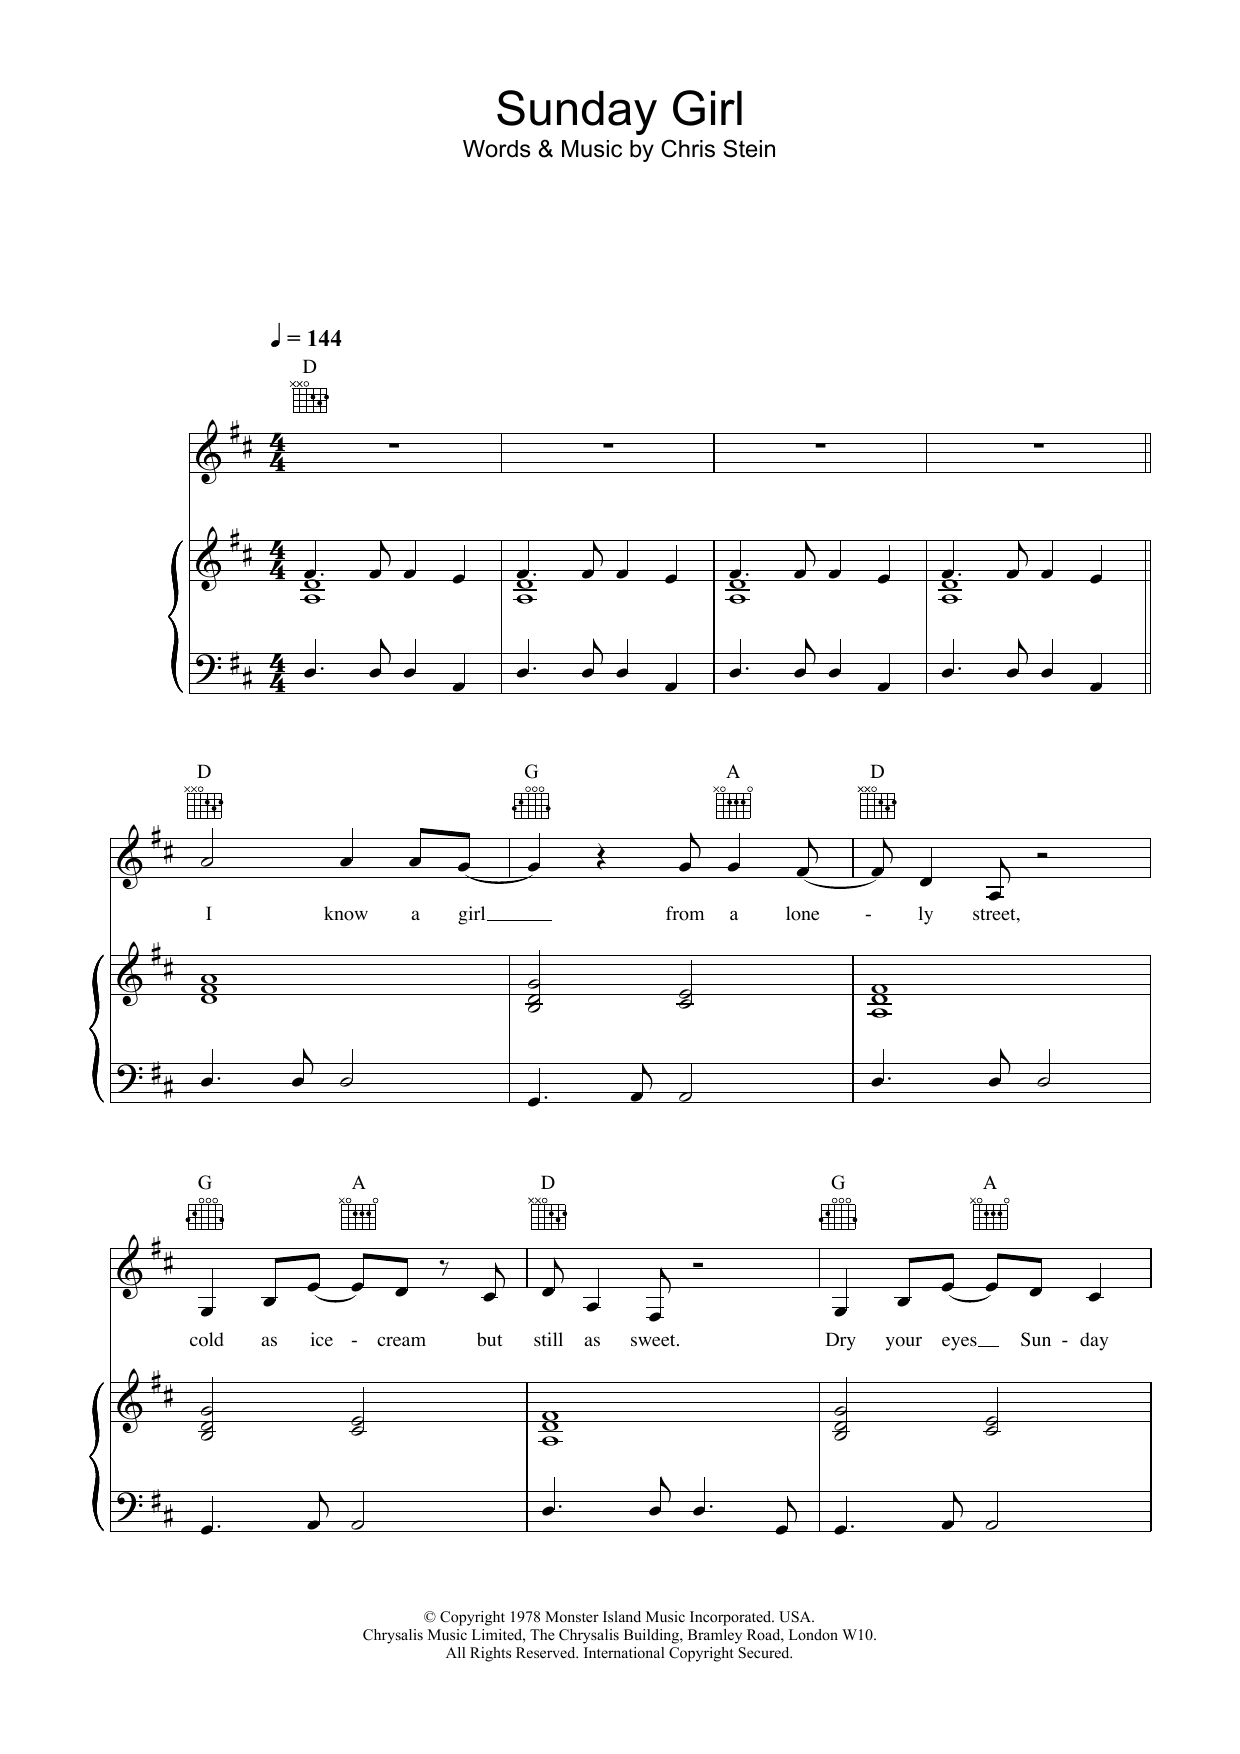 Blondie Sunday Girl Sheet Music Notes & Chords for Lyrics & Piano Chords - Download or Print PDF